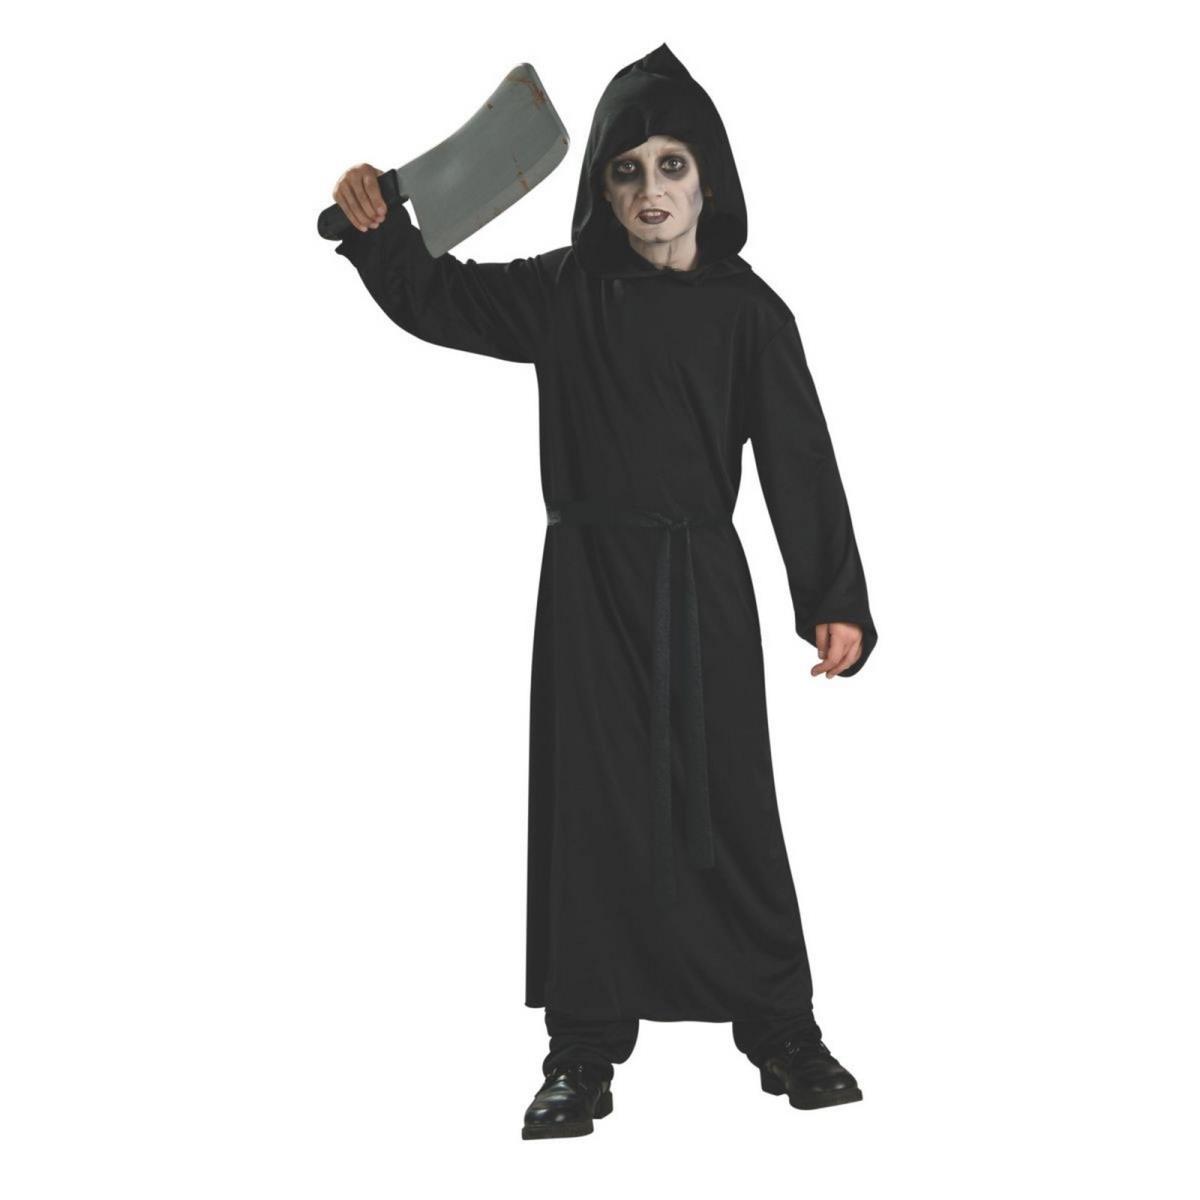 Picture of Rubies 406474 Child Fuller Cut Horror Robe Costume for Boys, Medium